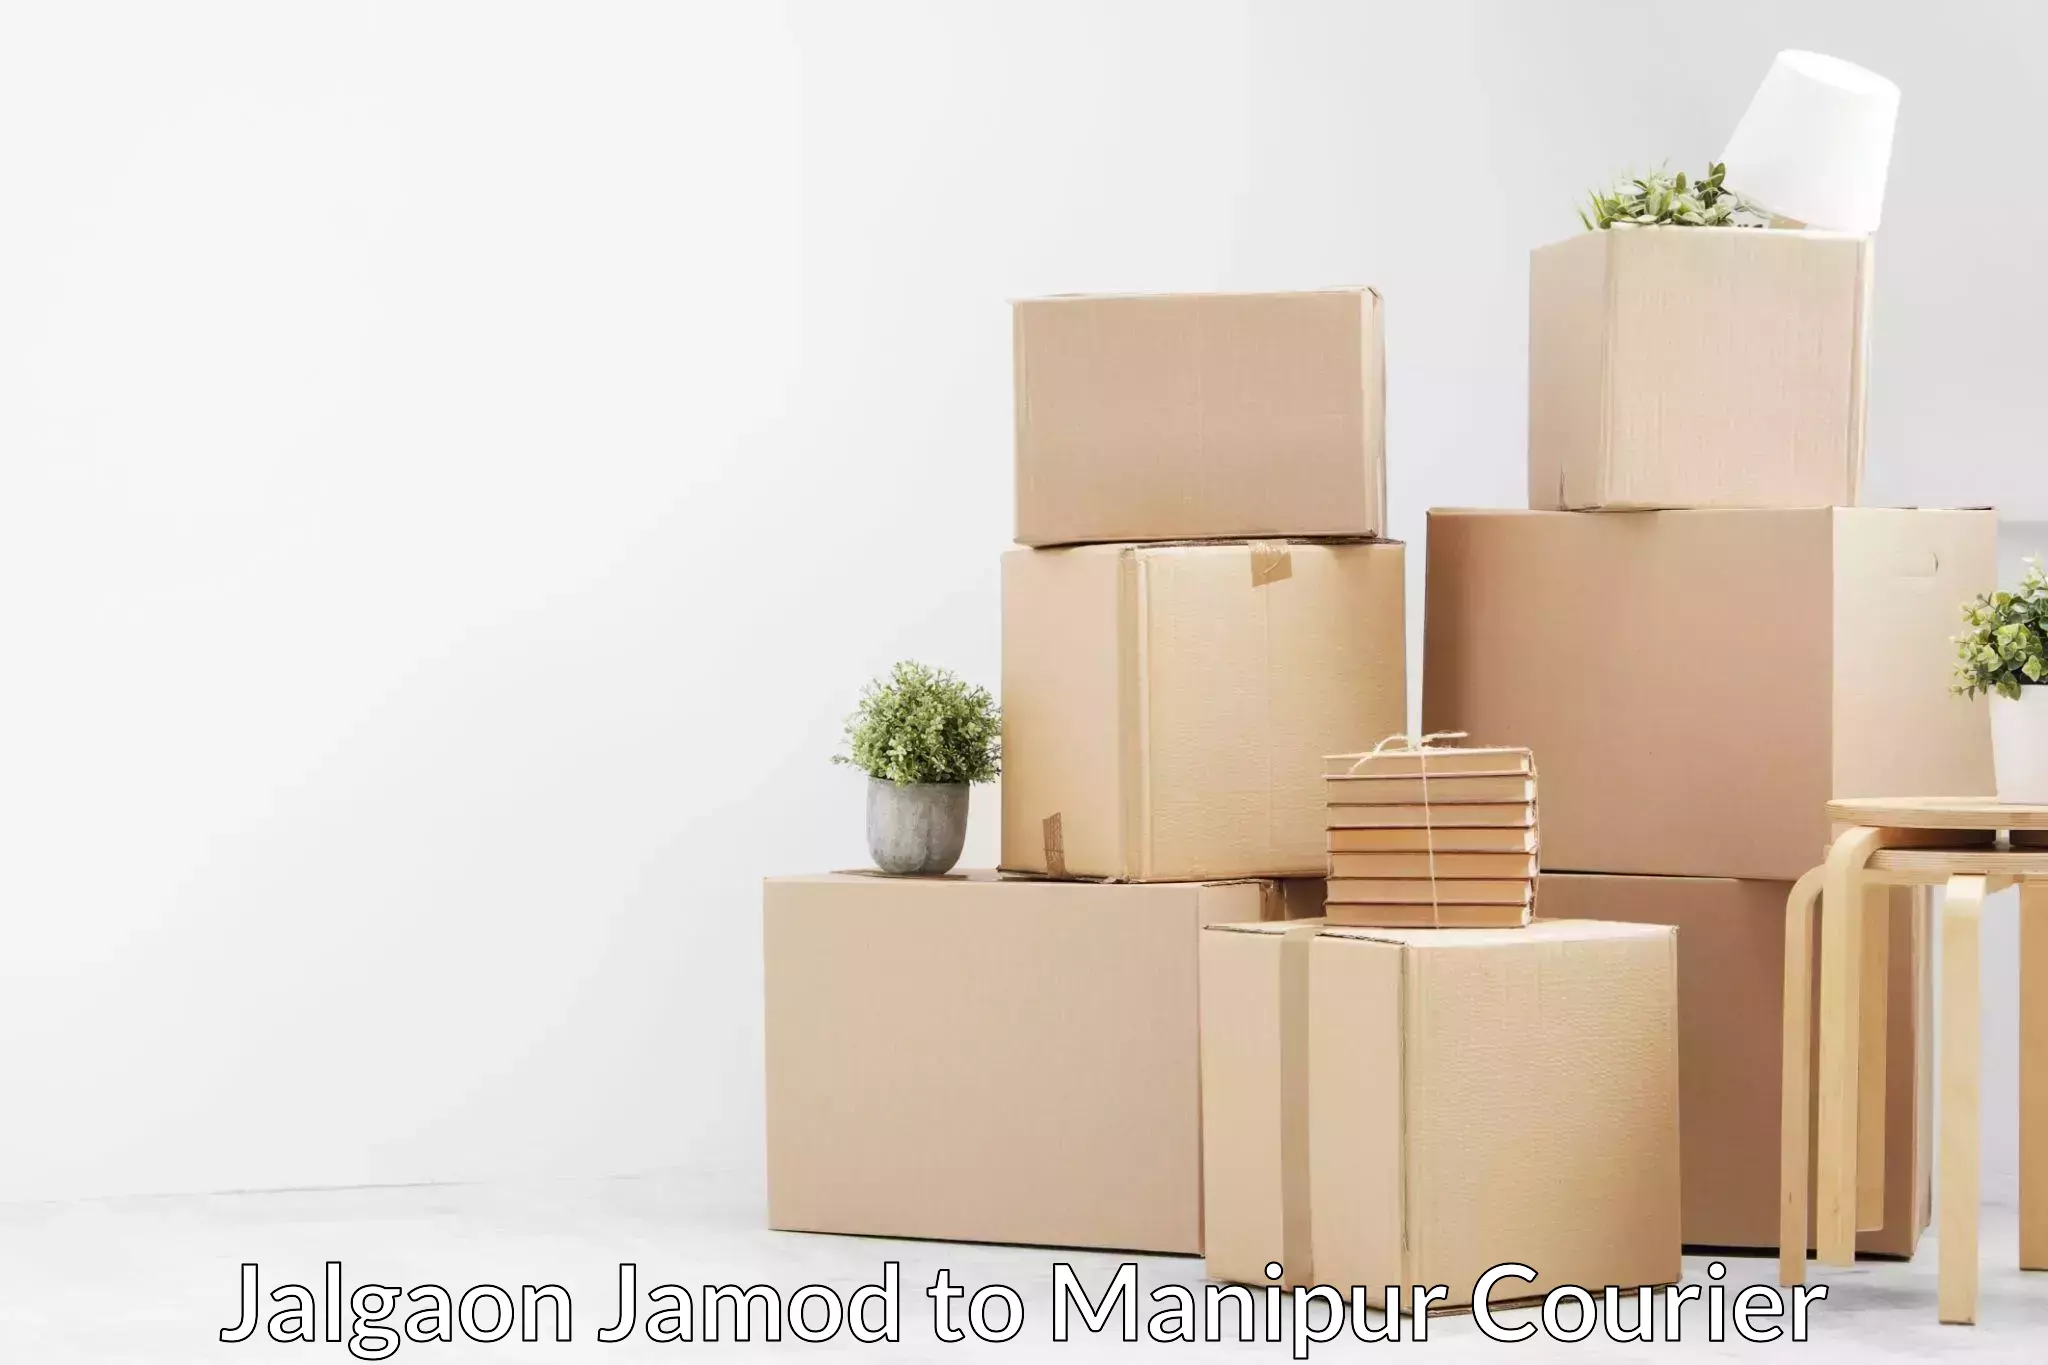 Trusted moving company Jalgaon Jamod to Chandel